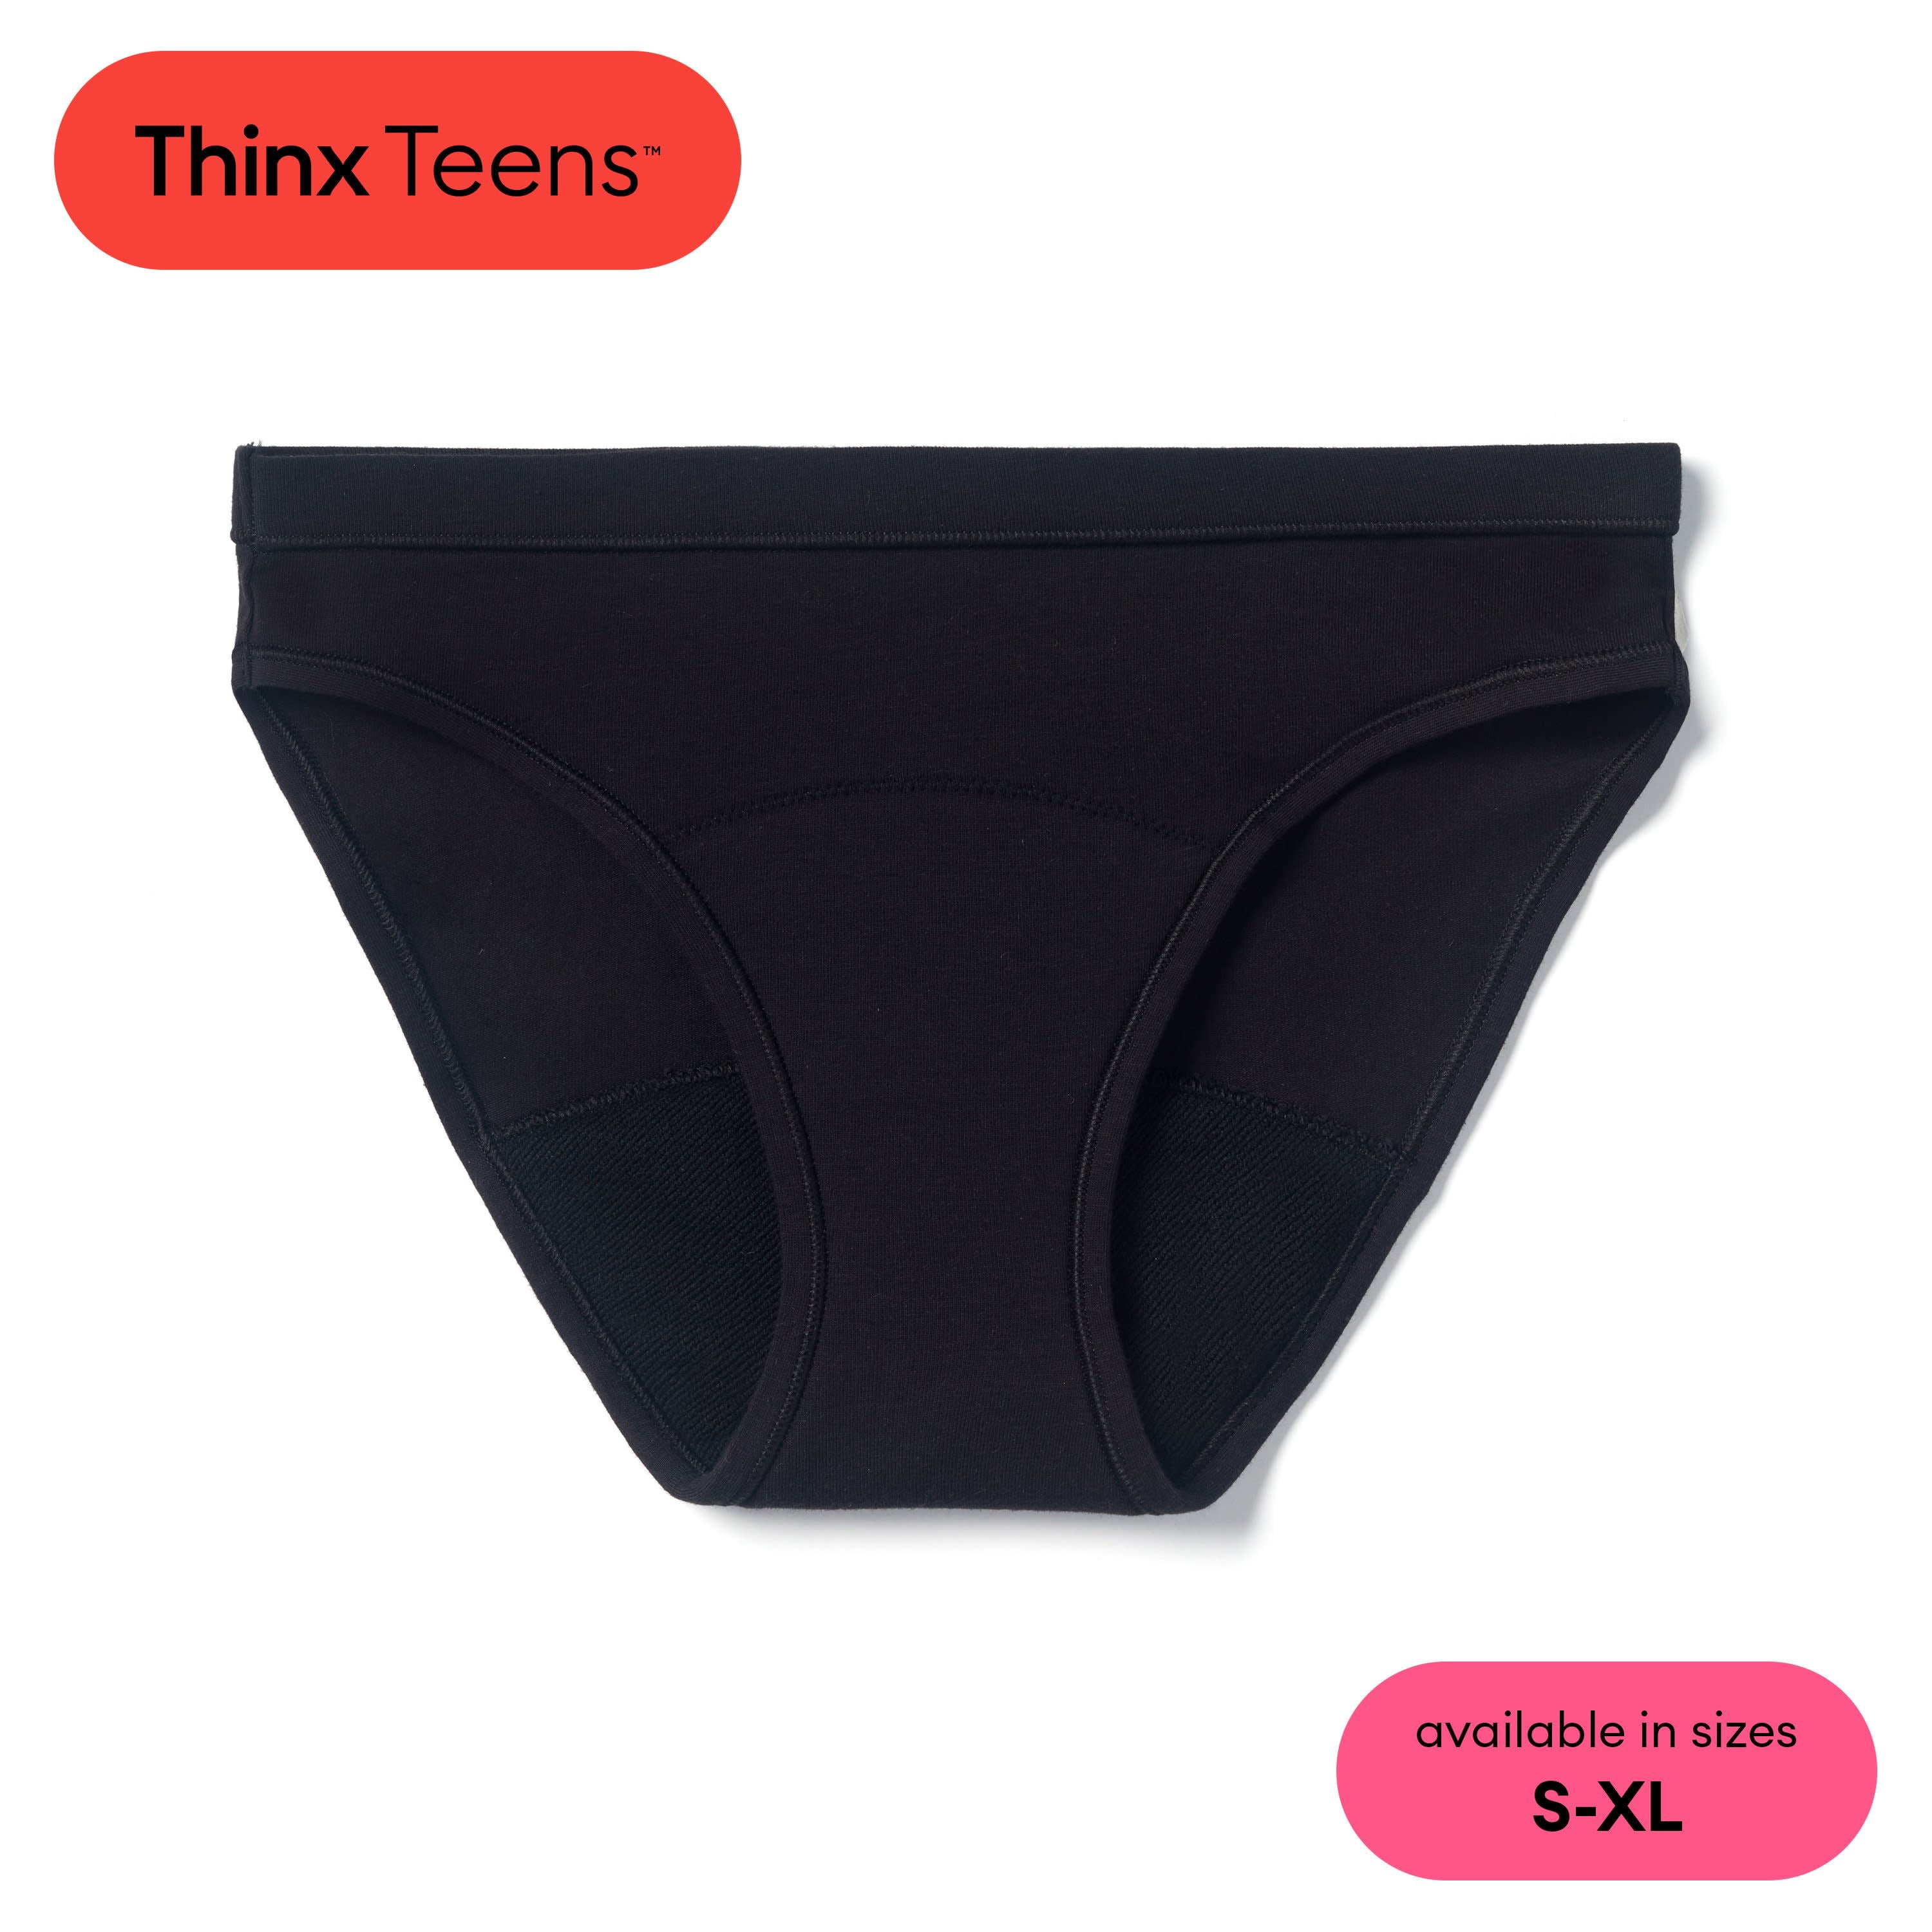 Thinx Teens Super Absorbency Cotton Bikini Period Underwear, Extra Large,  Black